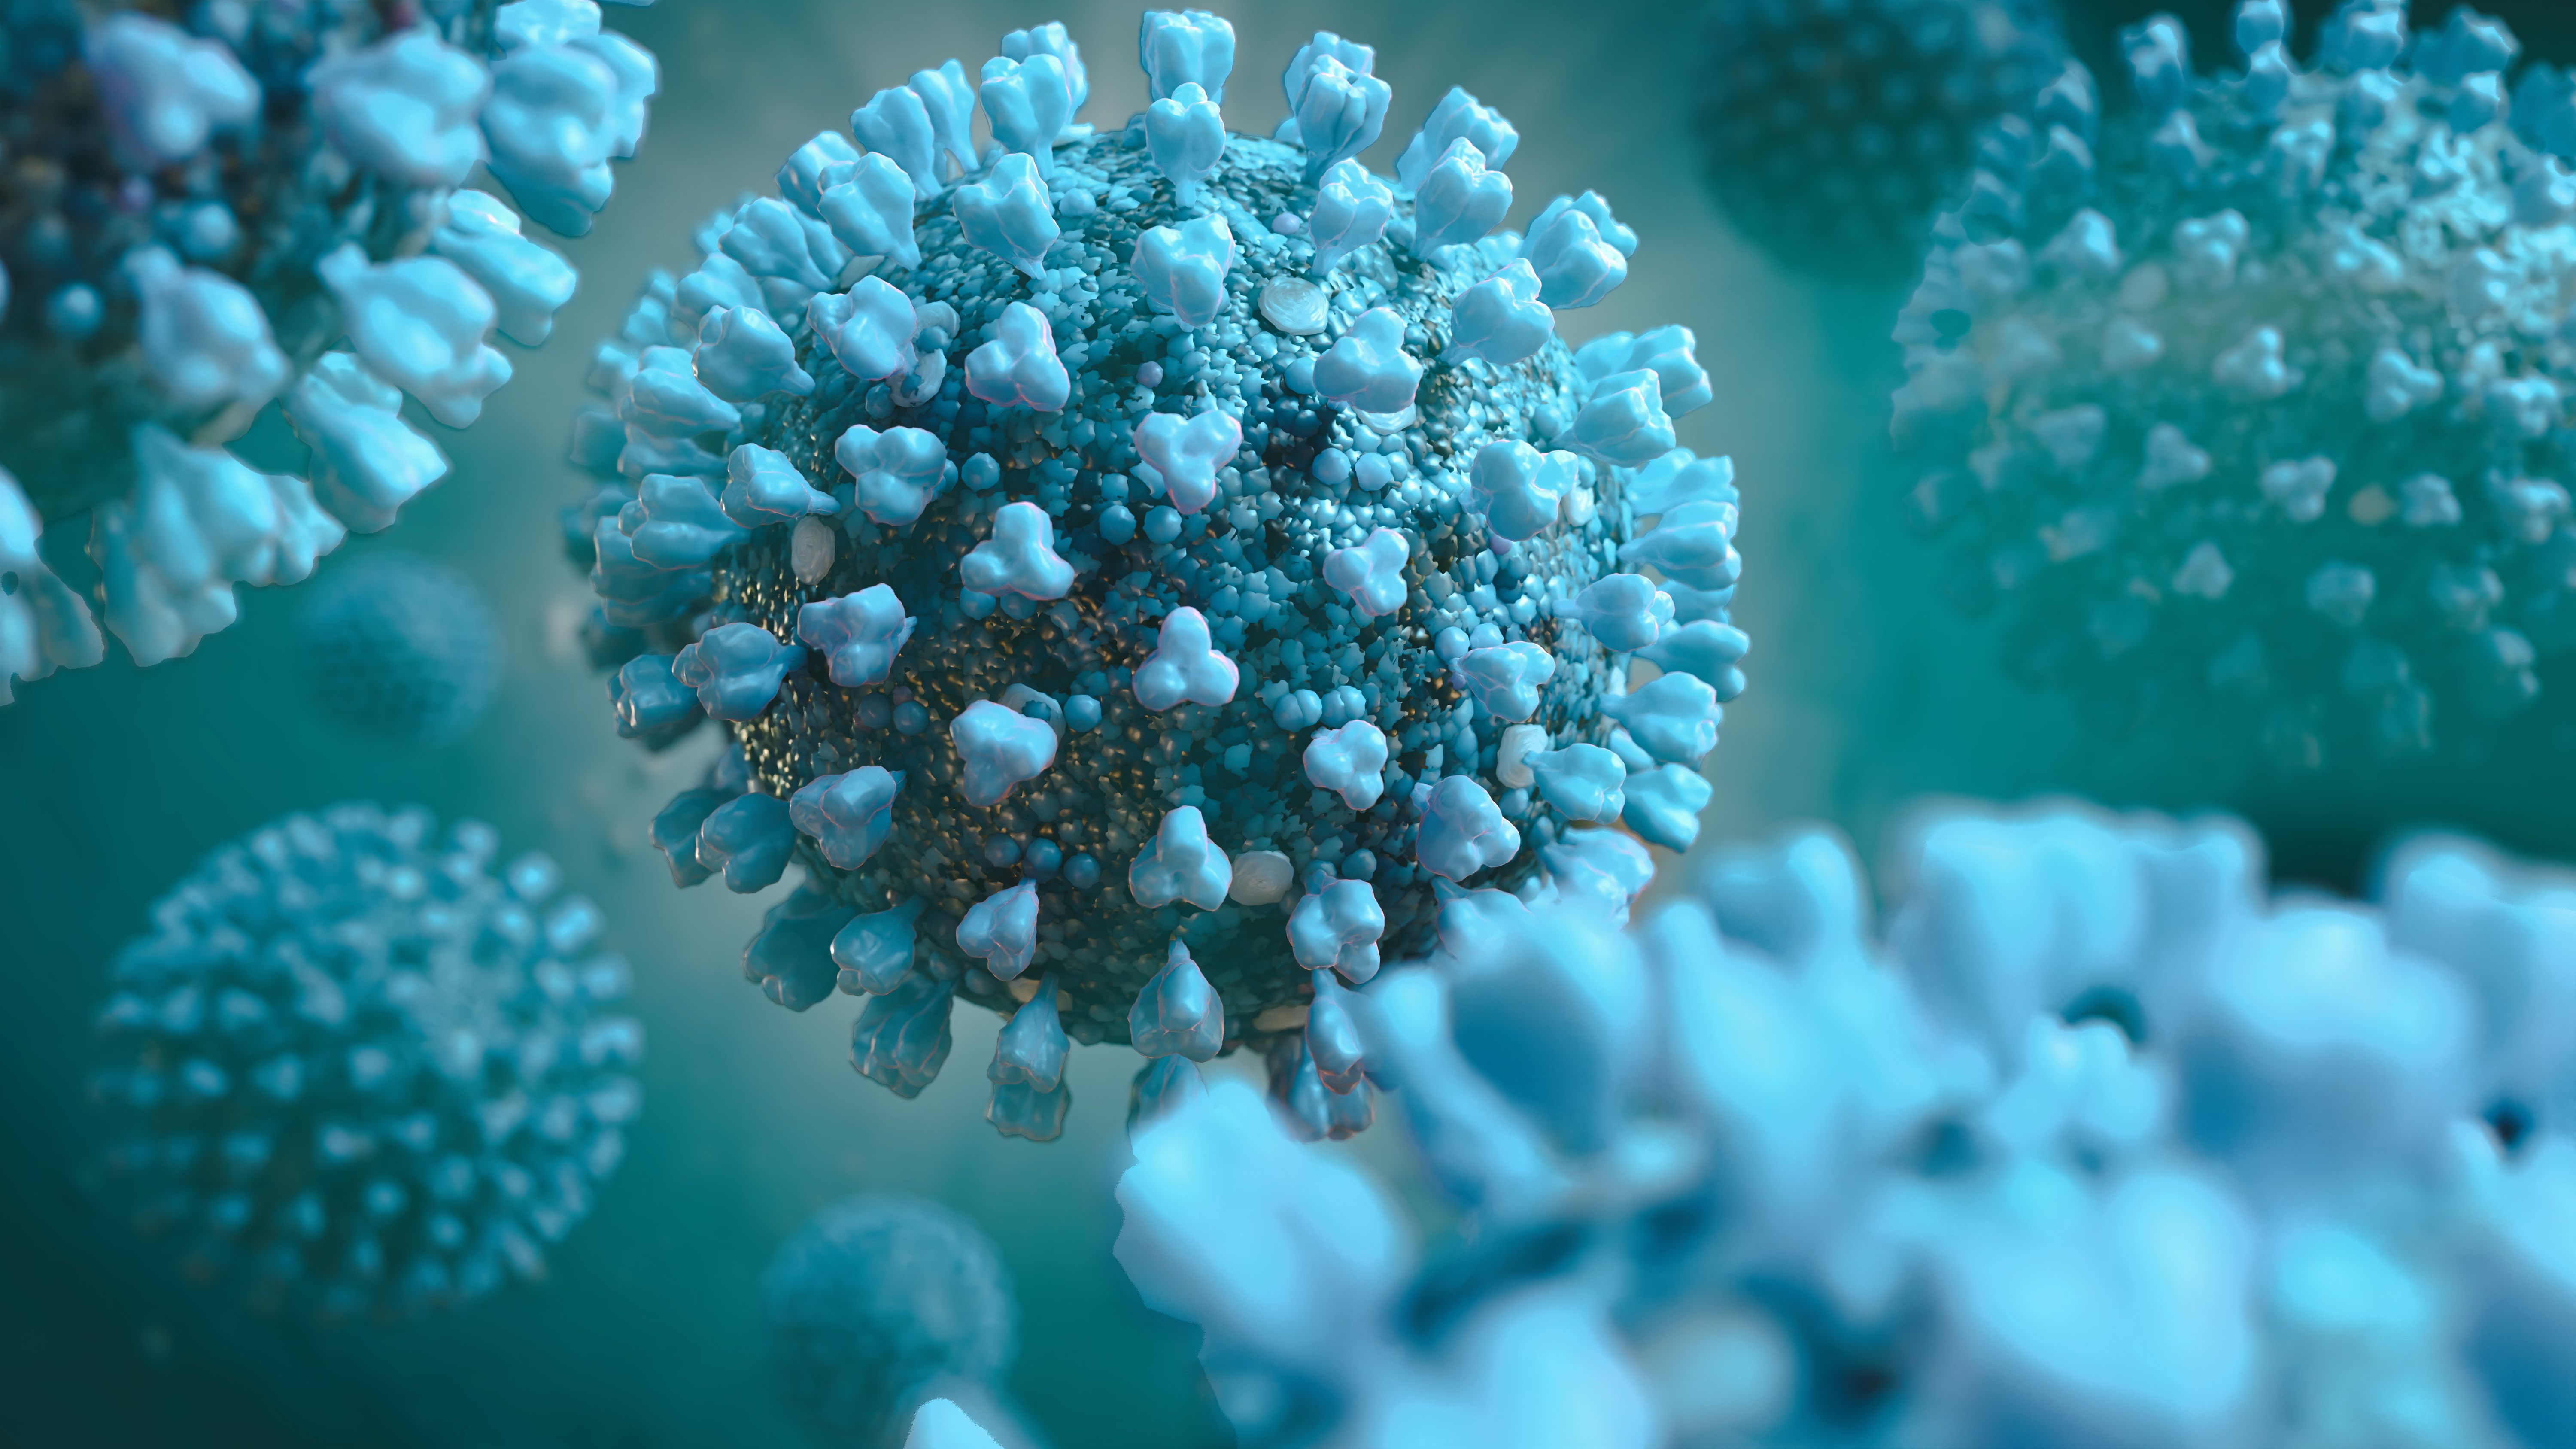 Influenza Virus Particle Analysis Using SEC